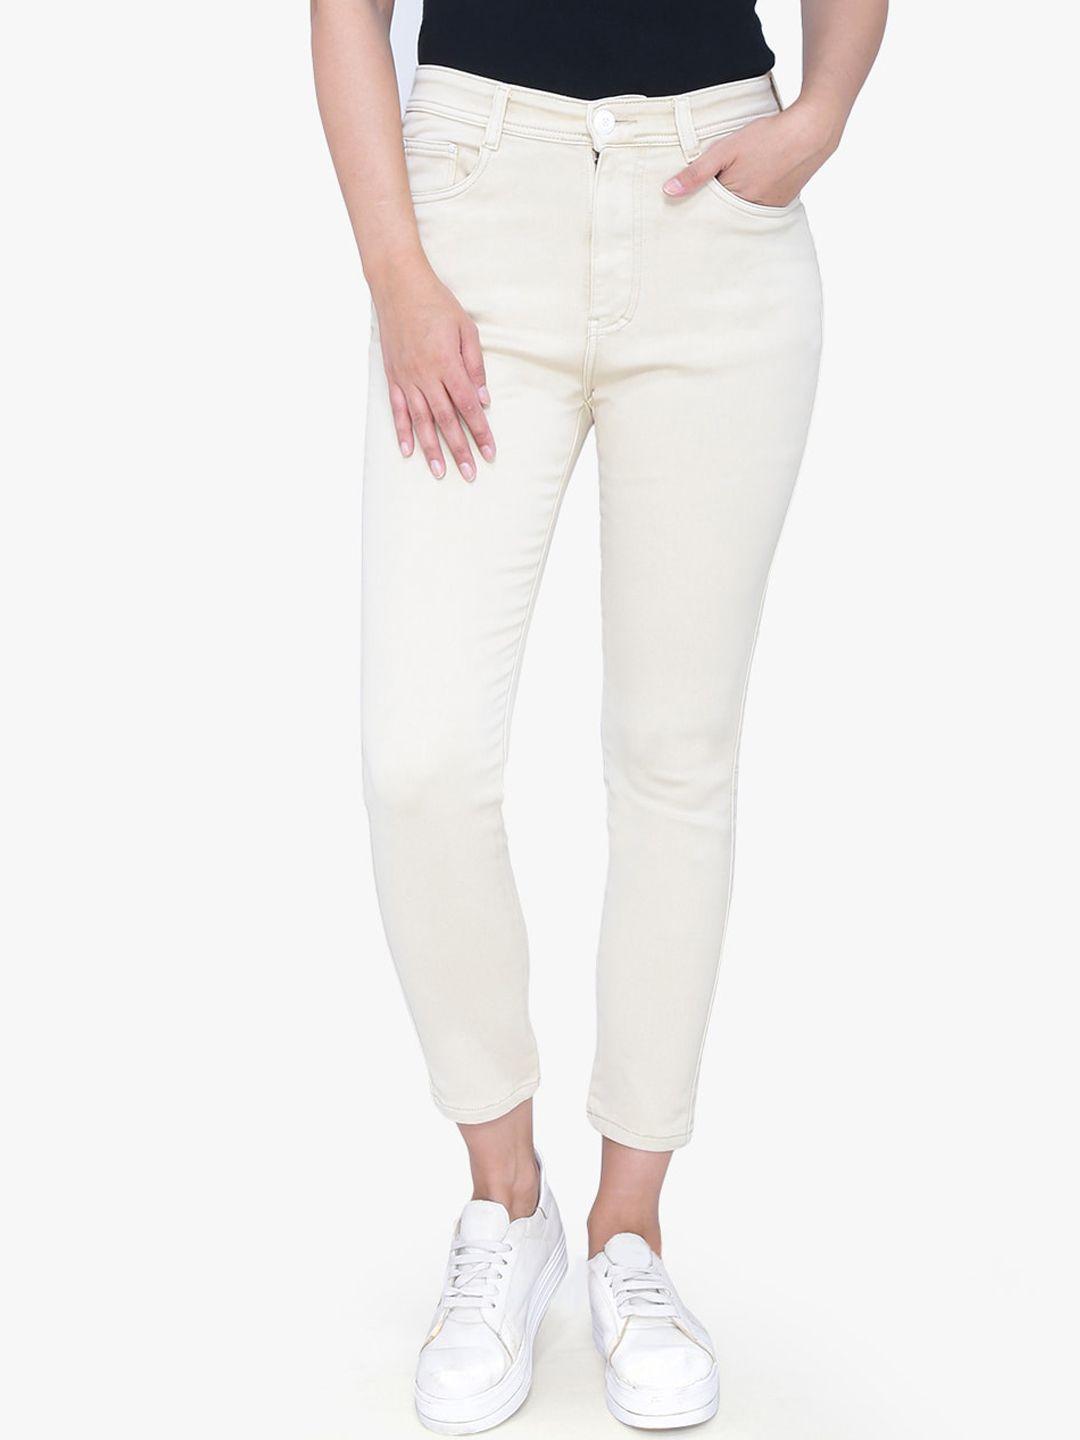 fck-3 women beige jean high-rise stretchable jeans